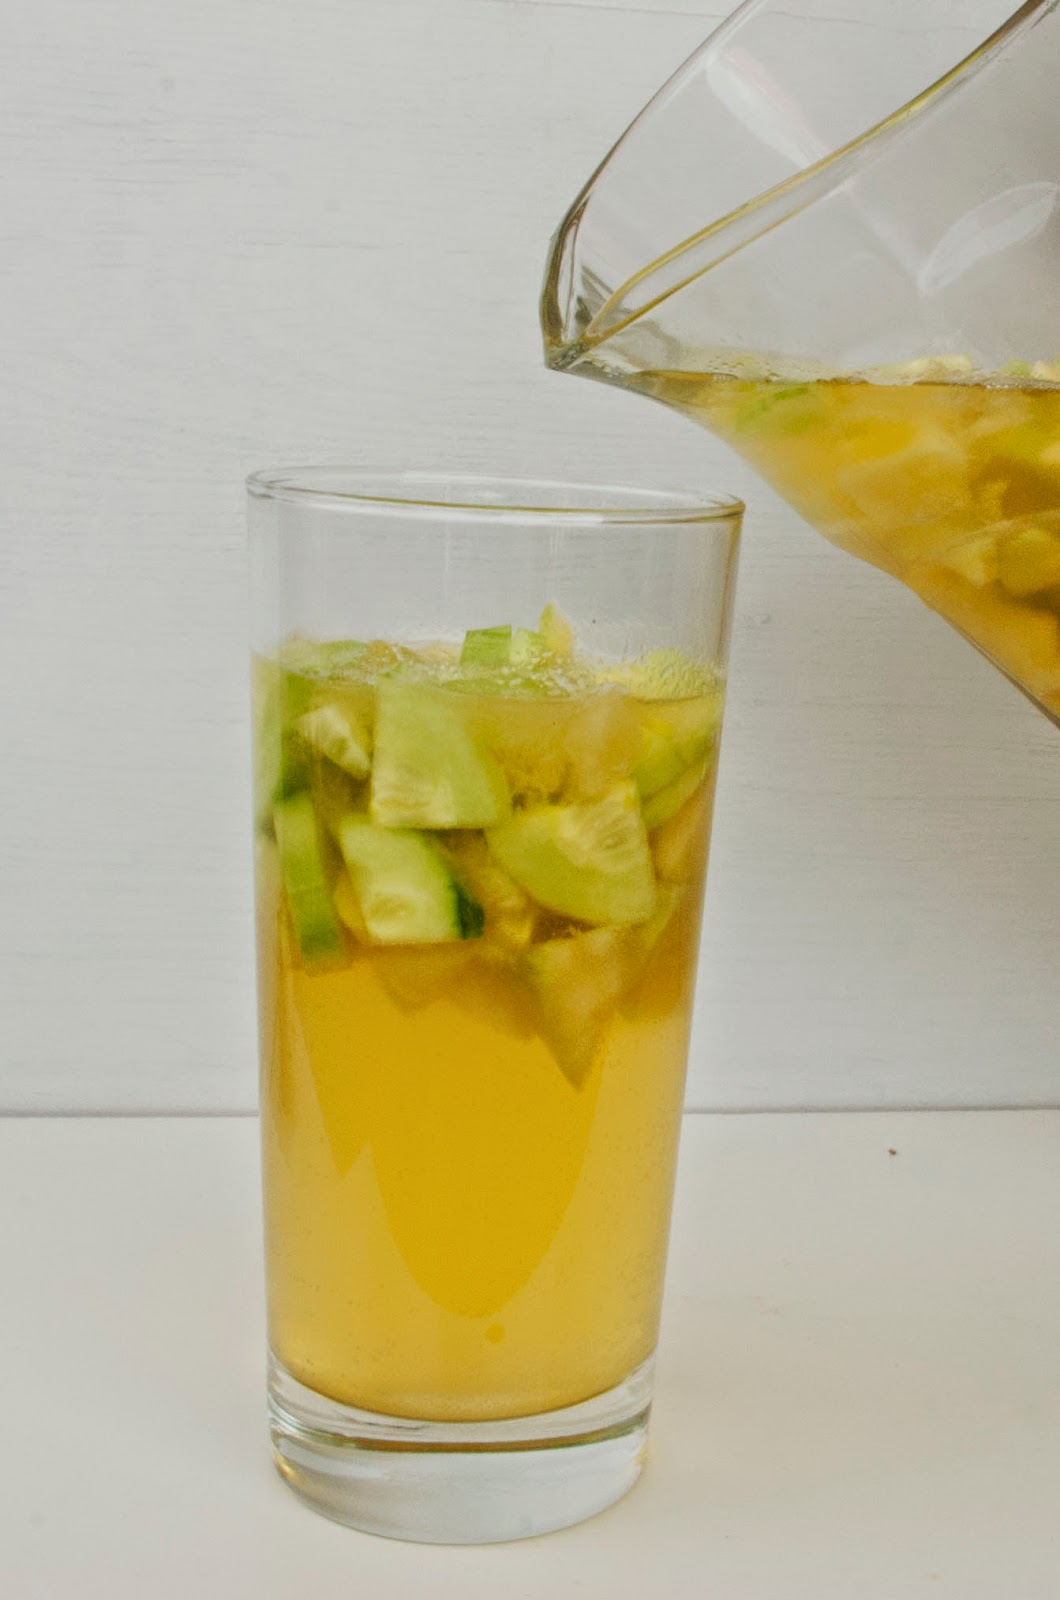 Gurken Melonen Bowle — Rezepte Suchen